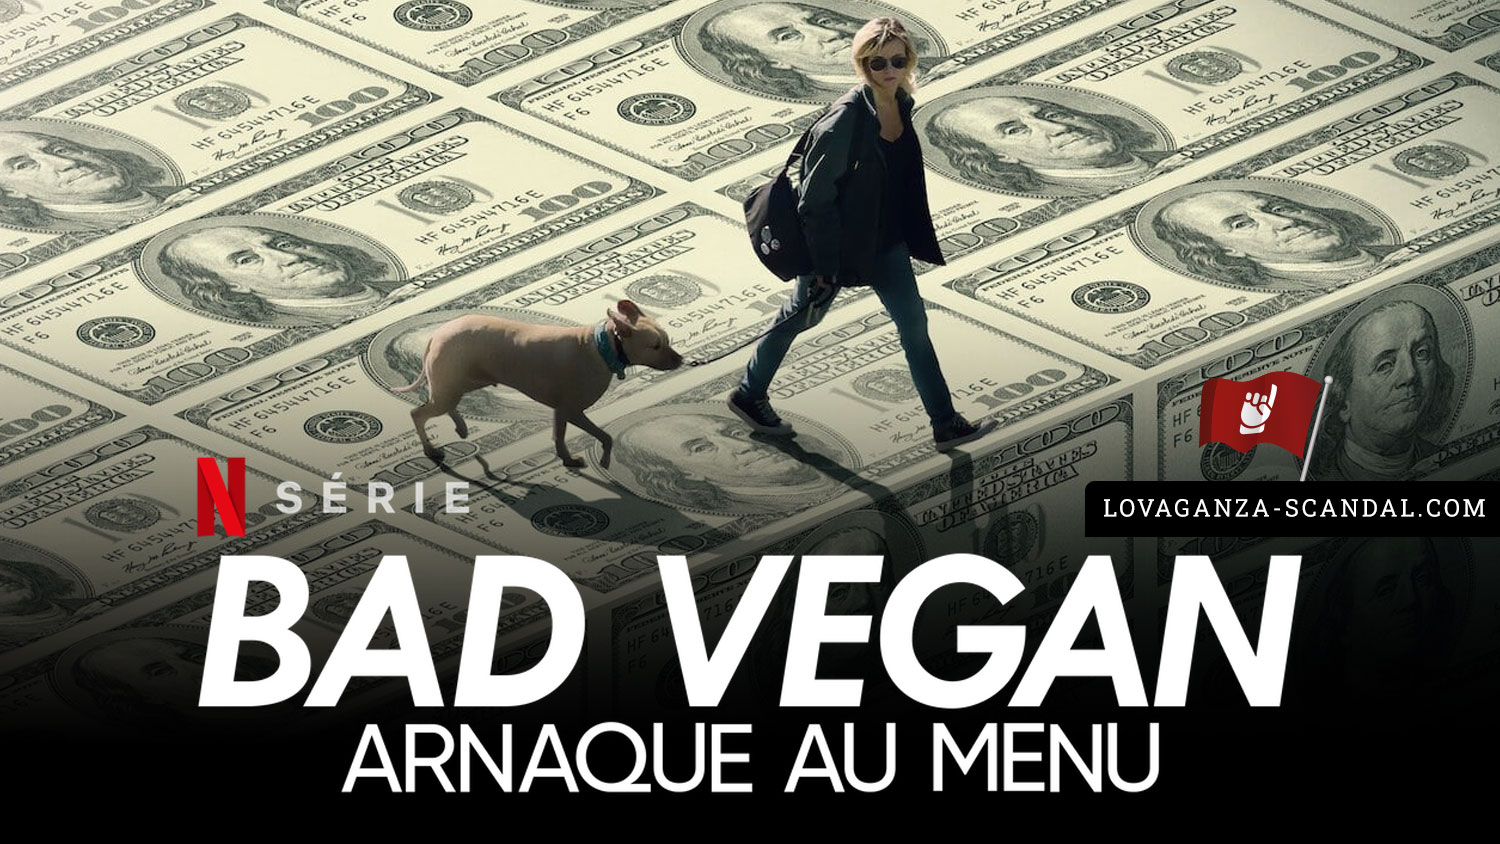 Arnaque au Menu - Bad Vegan - Lovaganza-Scandal.com